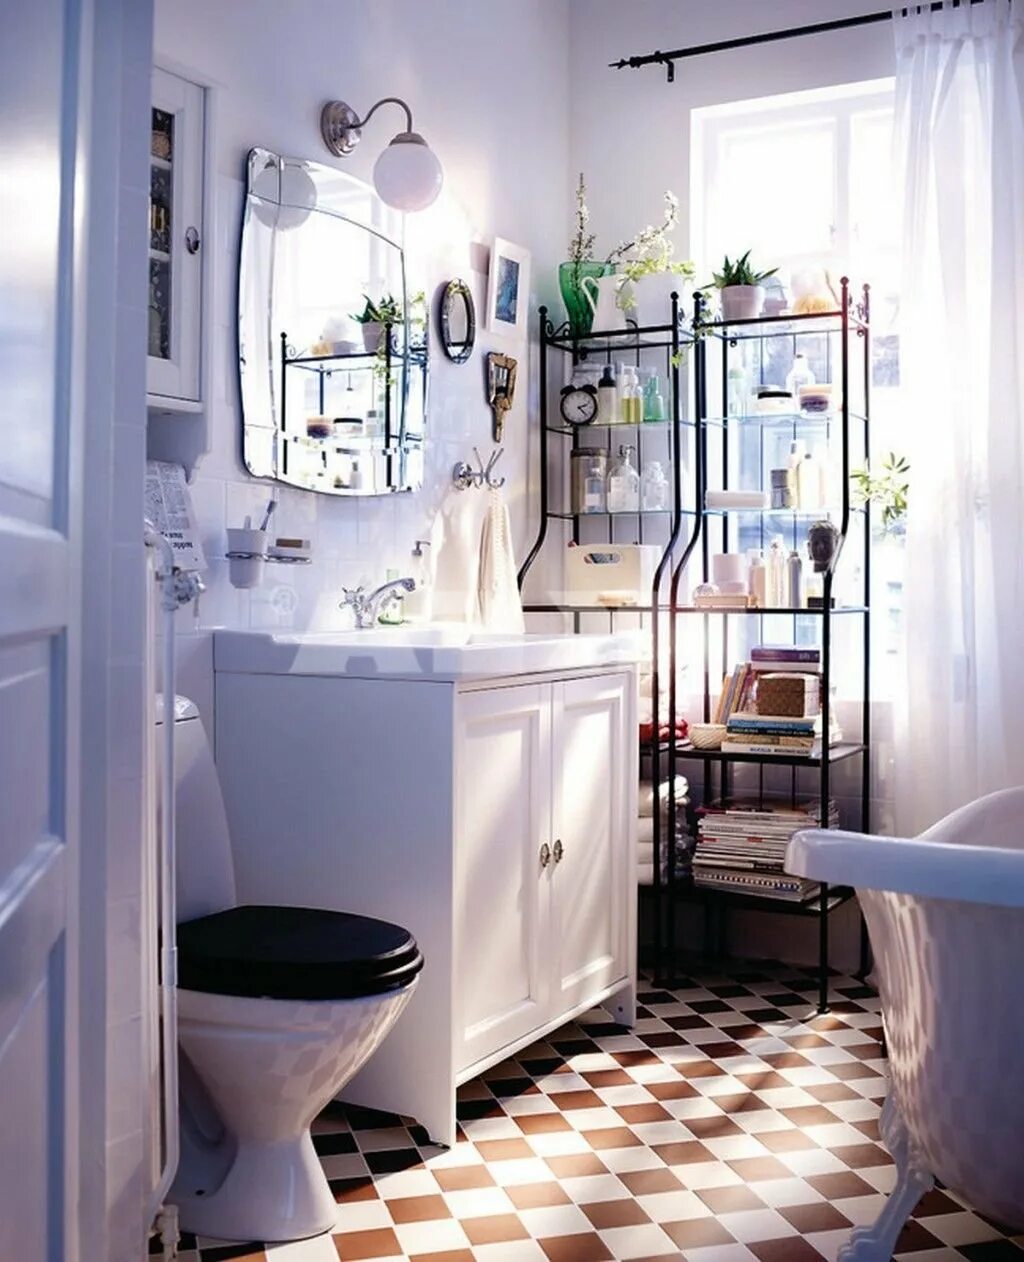 Ванная комната какая должны быть. Ikea ванна. Икеа Ванные комнаты. Интерьер ванной икеа. Ванная икеа в интерьере.